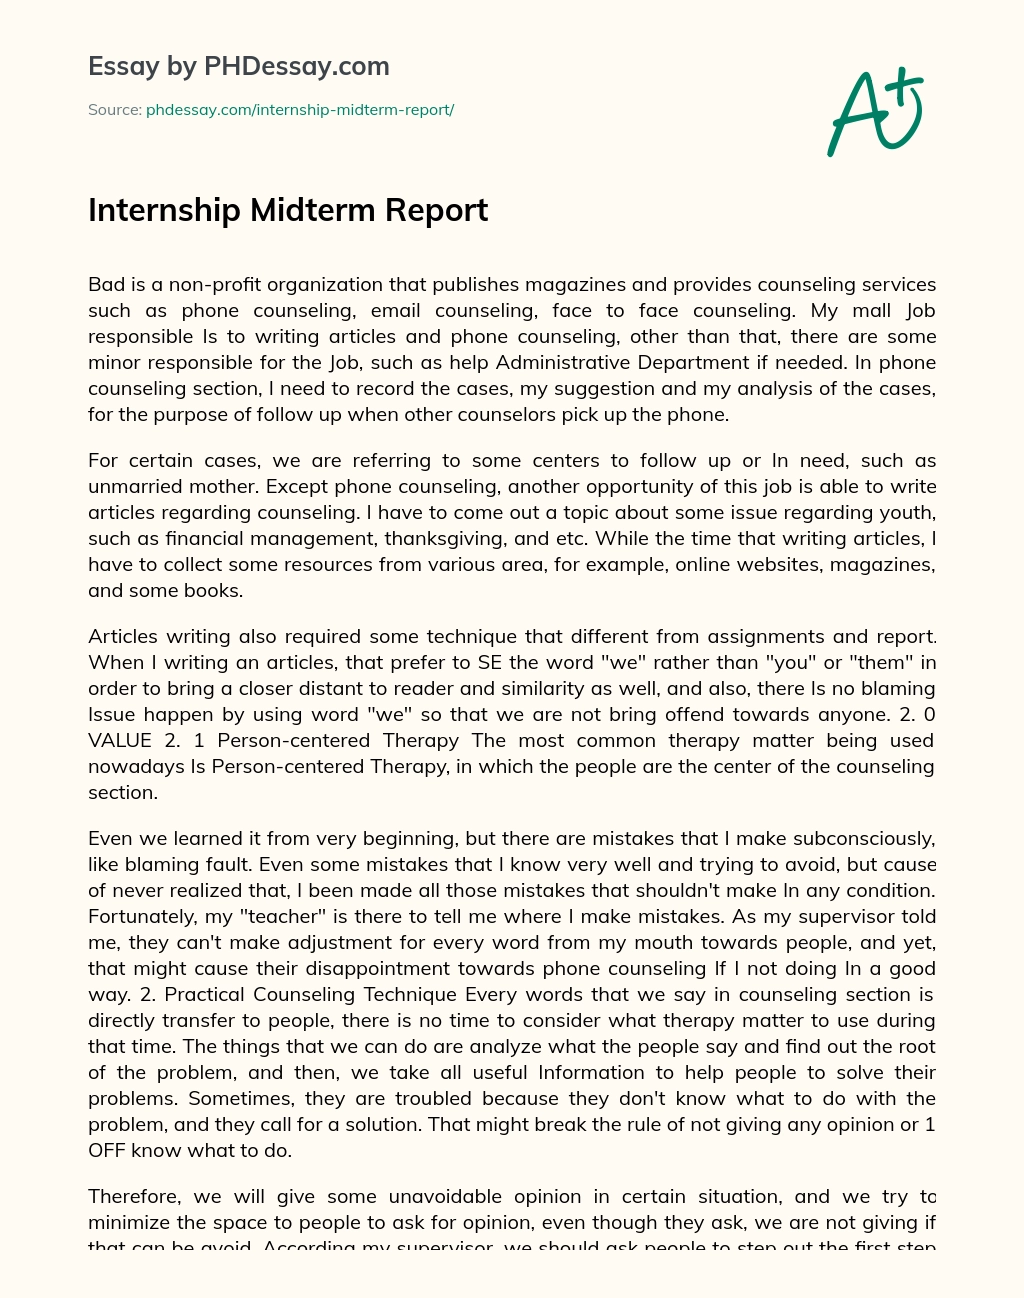 Internship Midterm Report essay